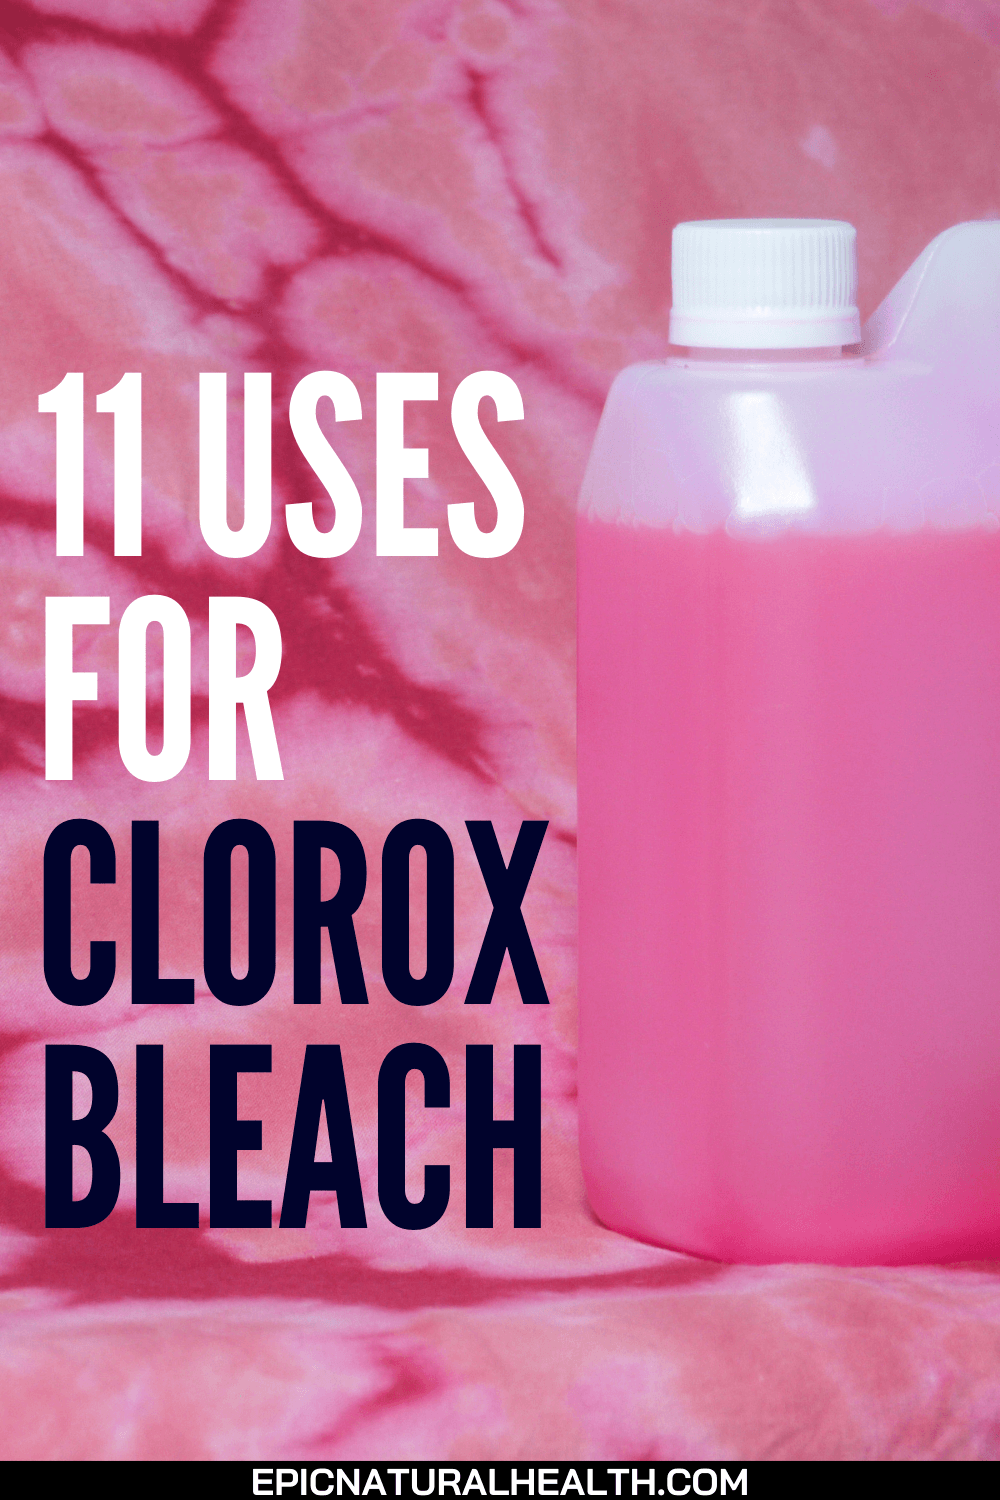 11 uses for clorox bleach